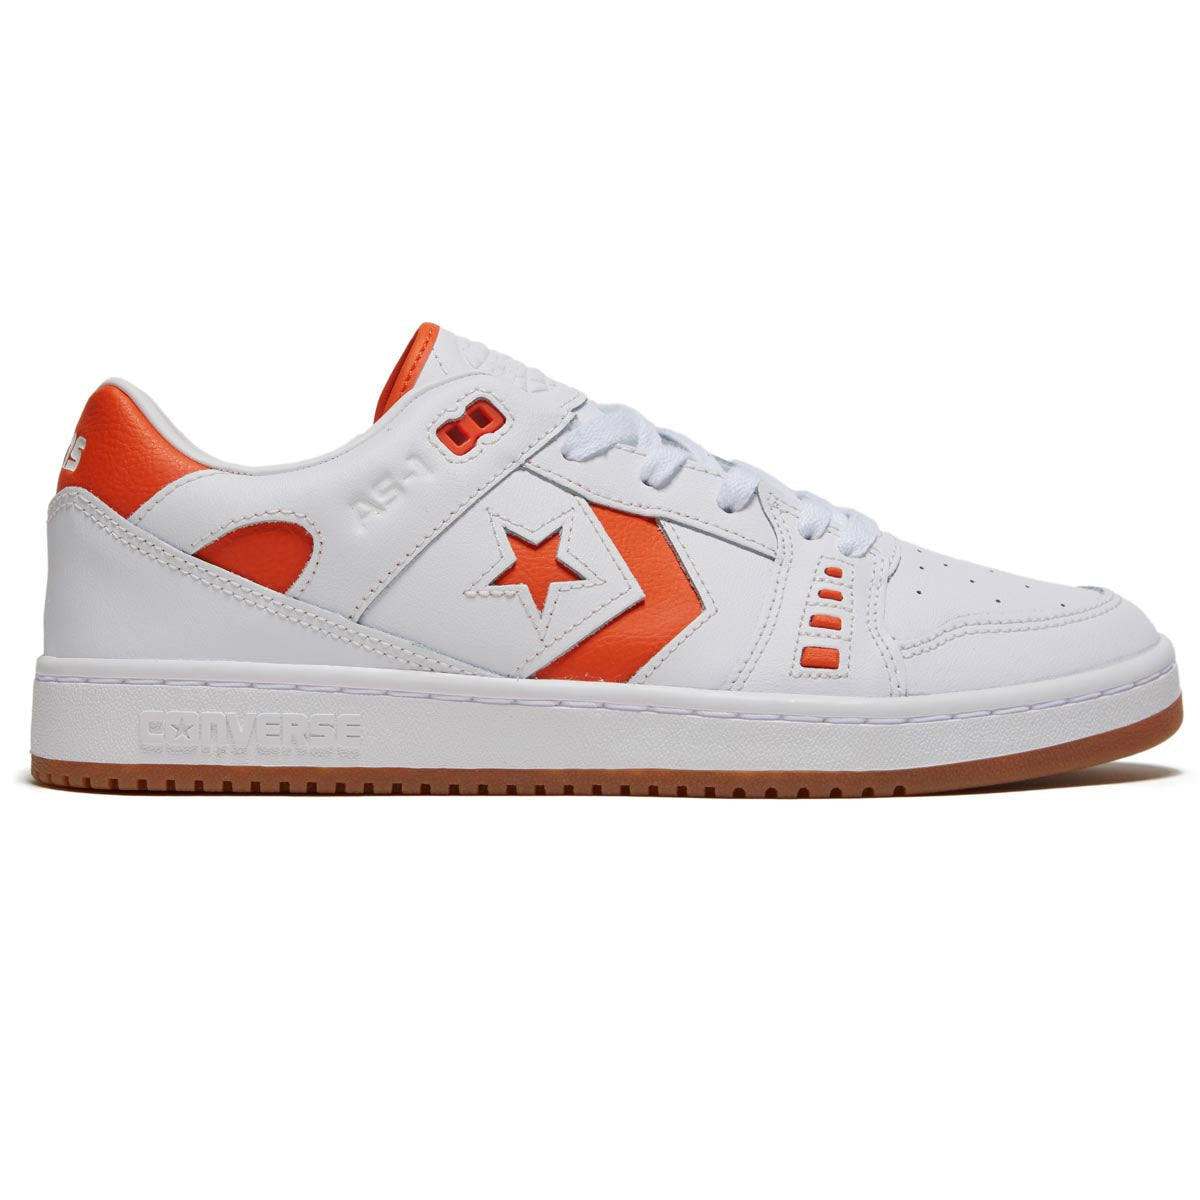 Converse AS-1 Pro Leather Ox Shoes - White/Orange/White image 1